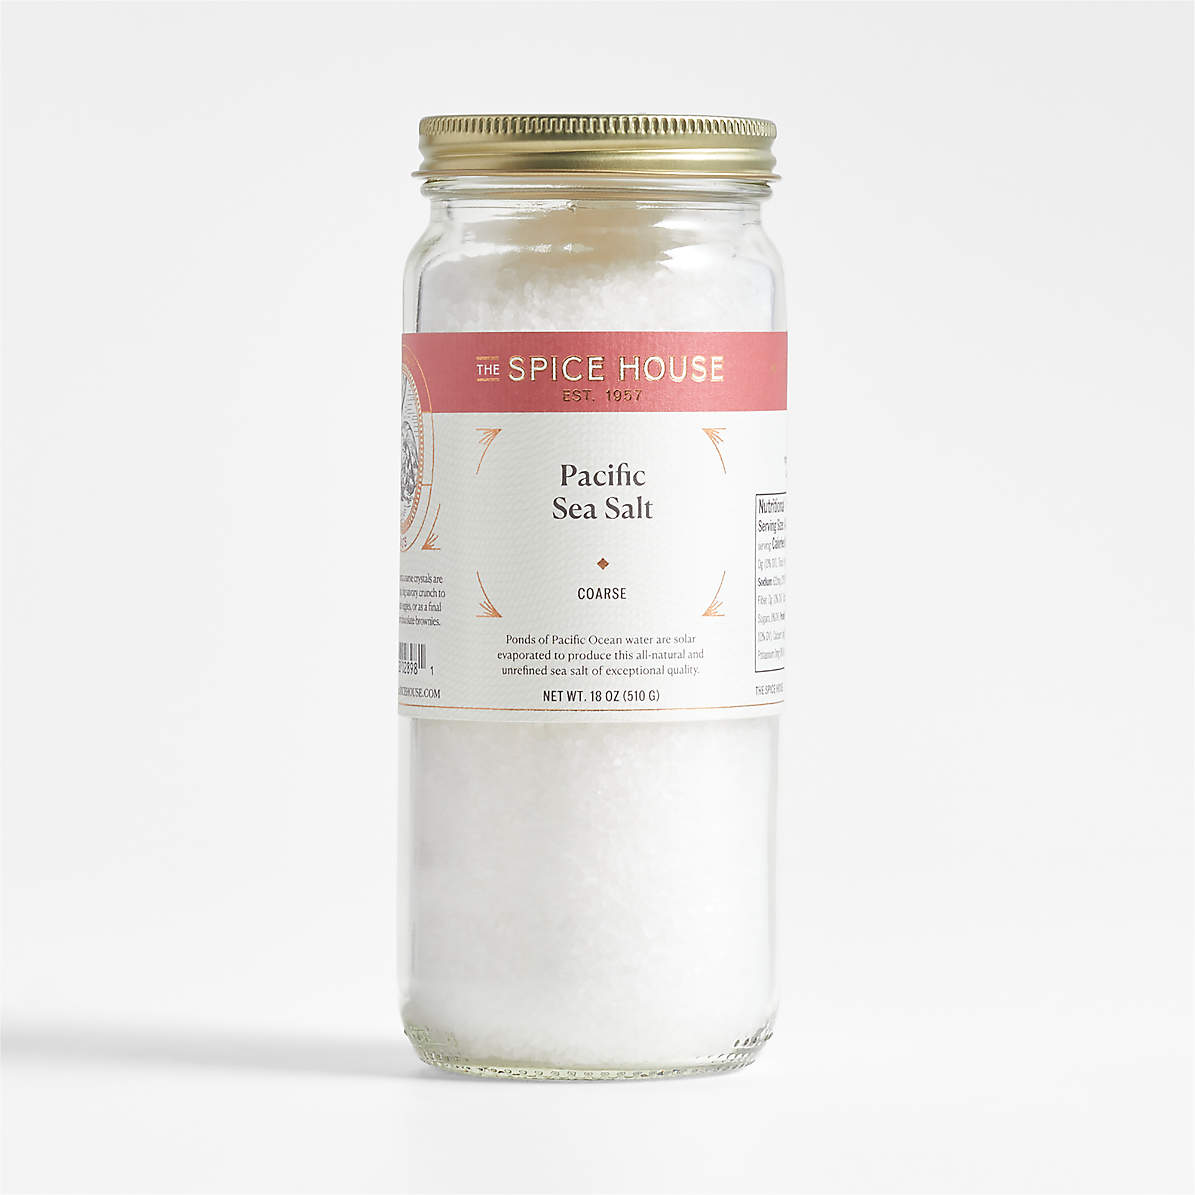 Electric Salt and Pepper Grinder | Crate & Barrel